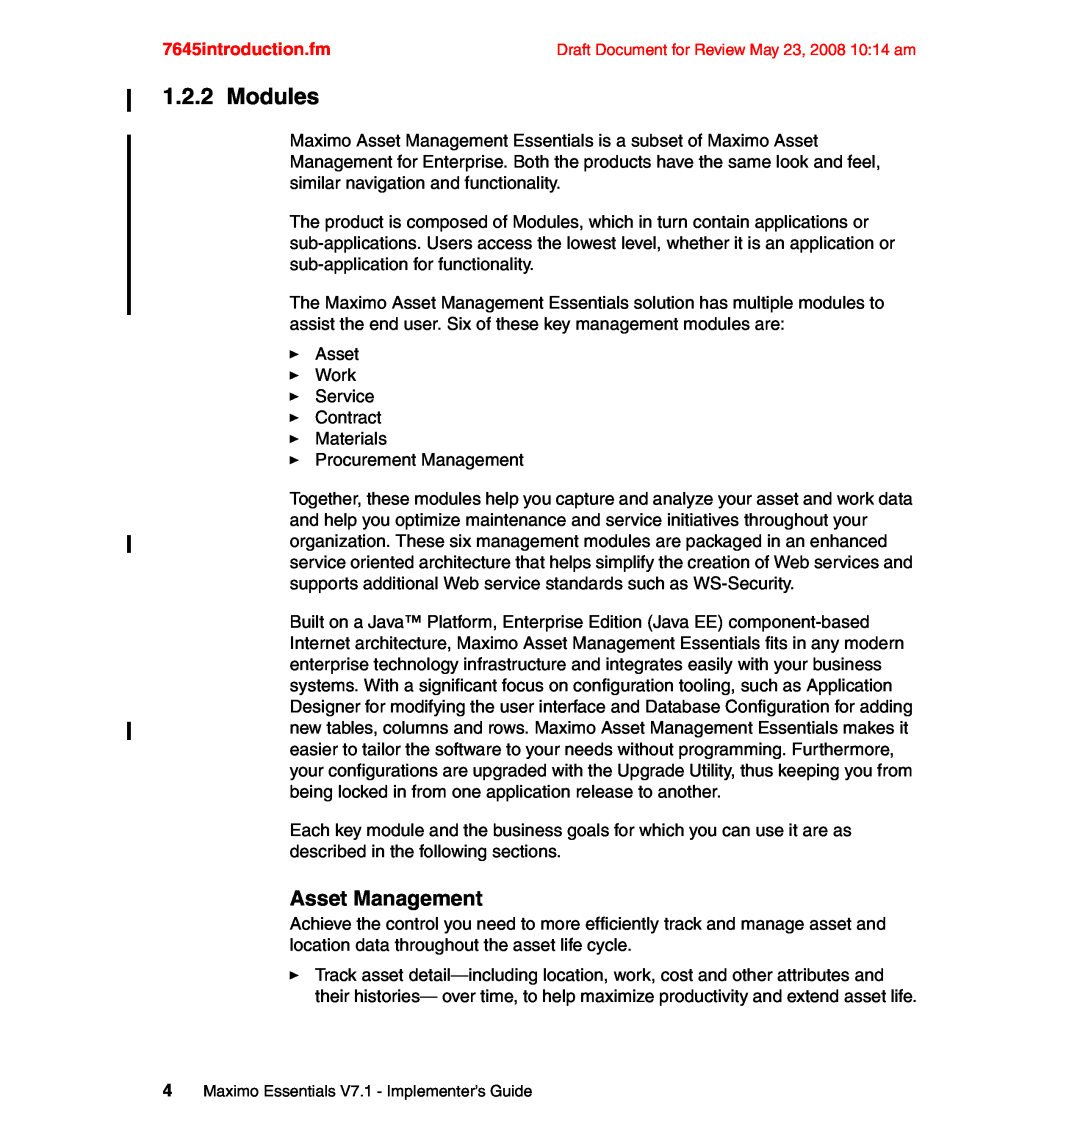 IBM SG24-7645-00 manual Modules, Asset Management, 7645introduction.fm 